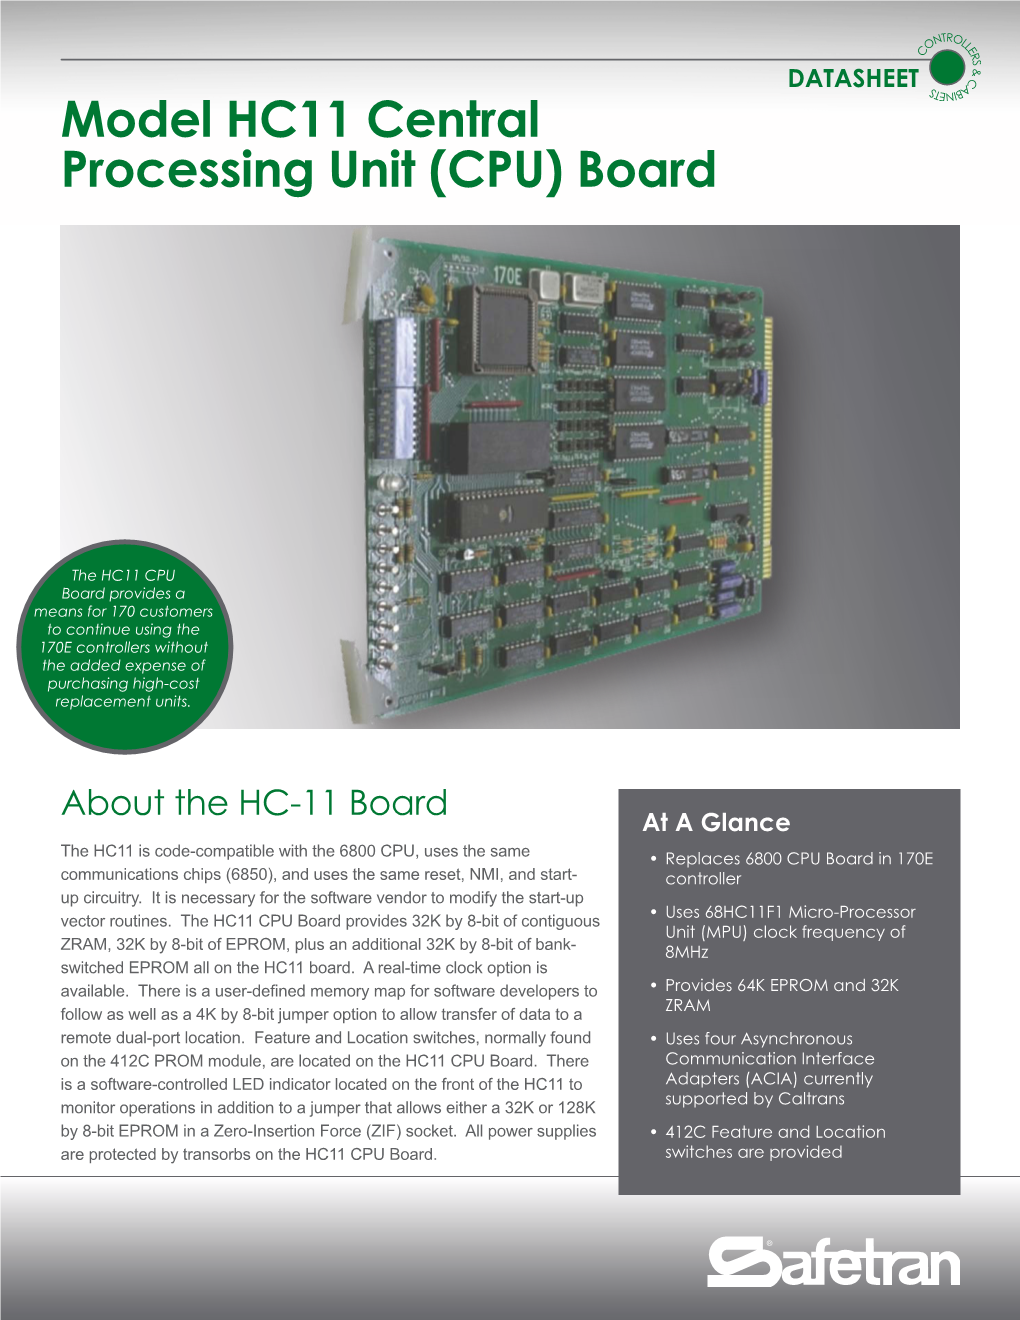 Model HC11 Central Processing Unit (CPU) Board